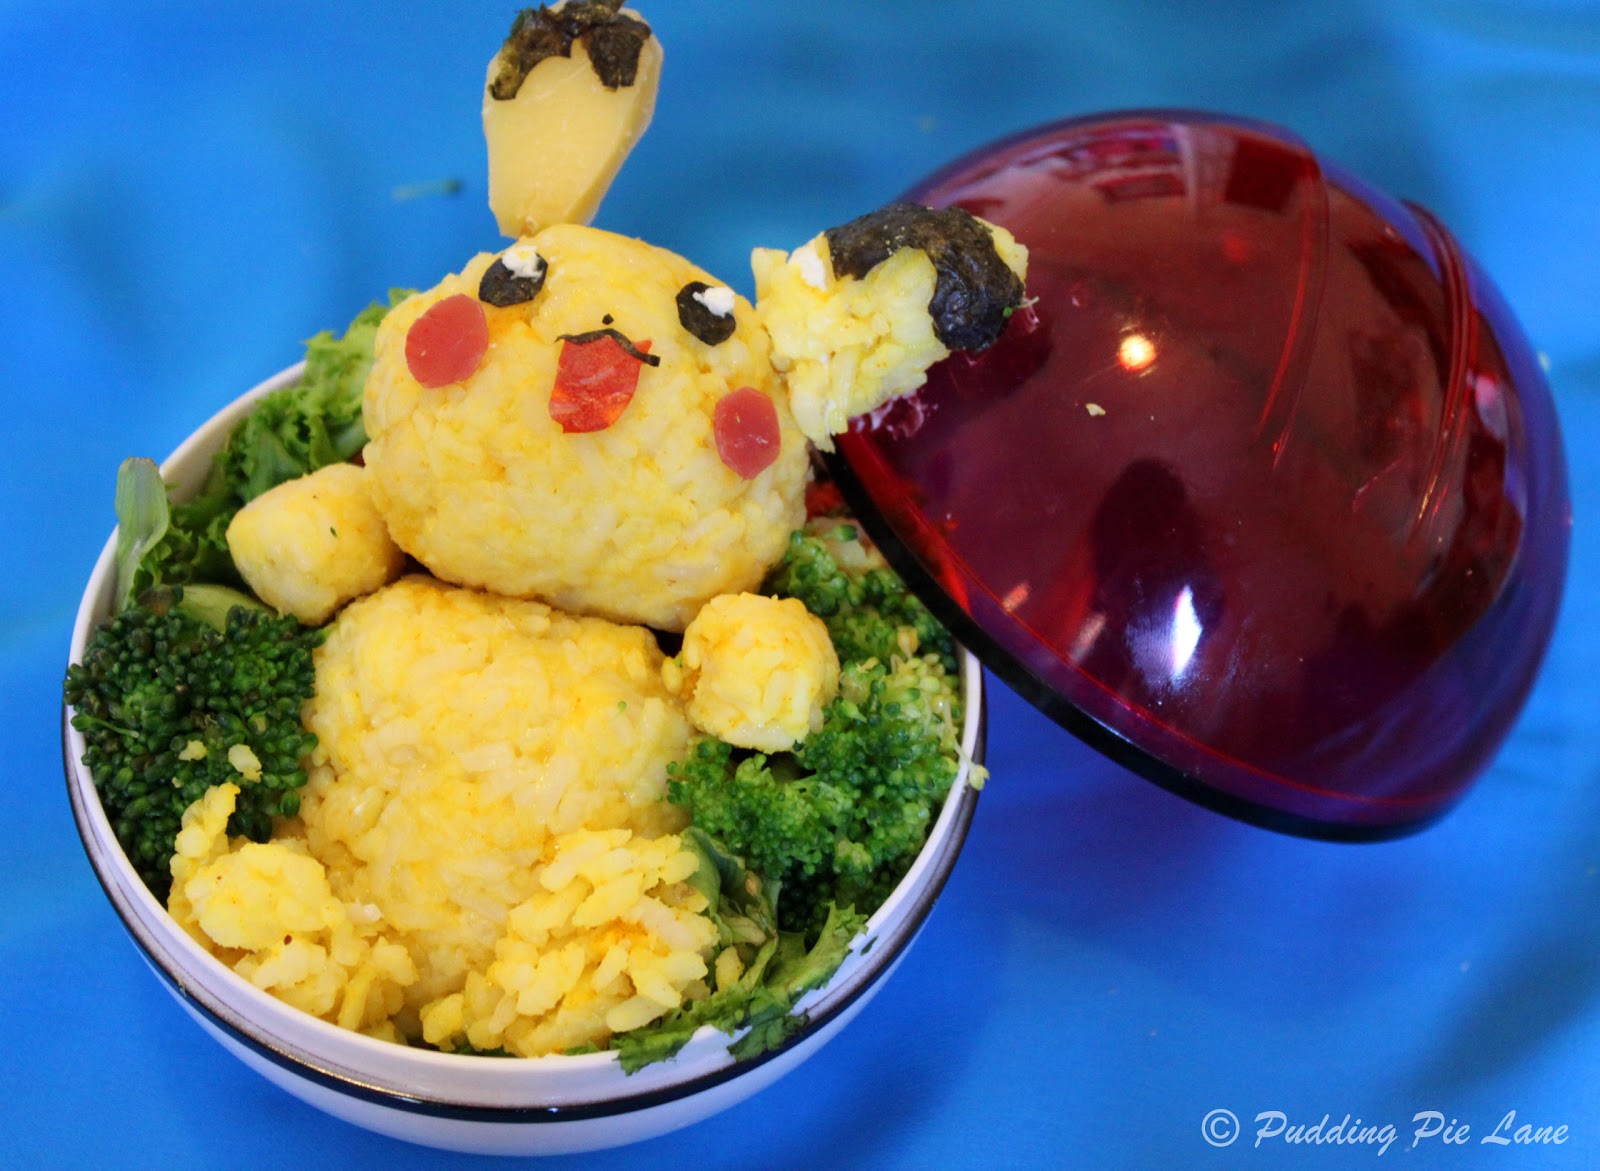 Halloween Pikachu Character Bento Box - Love At First Bento